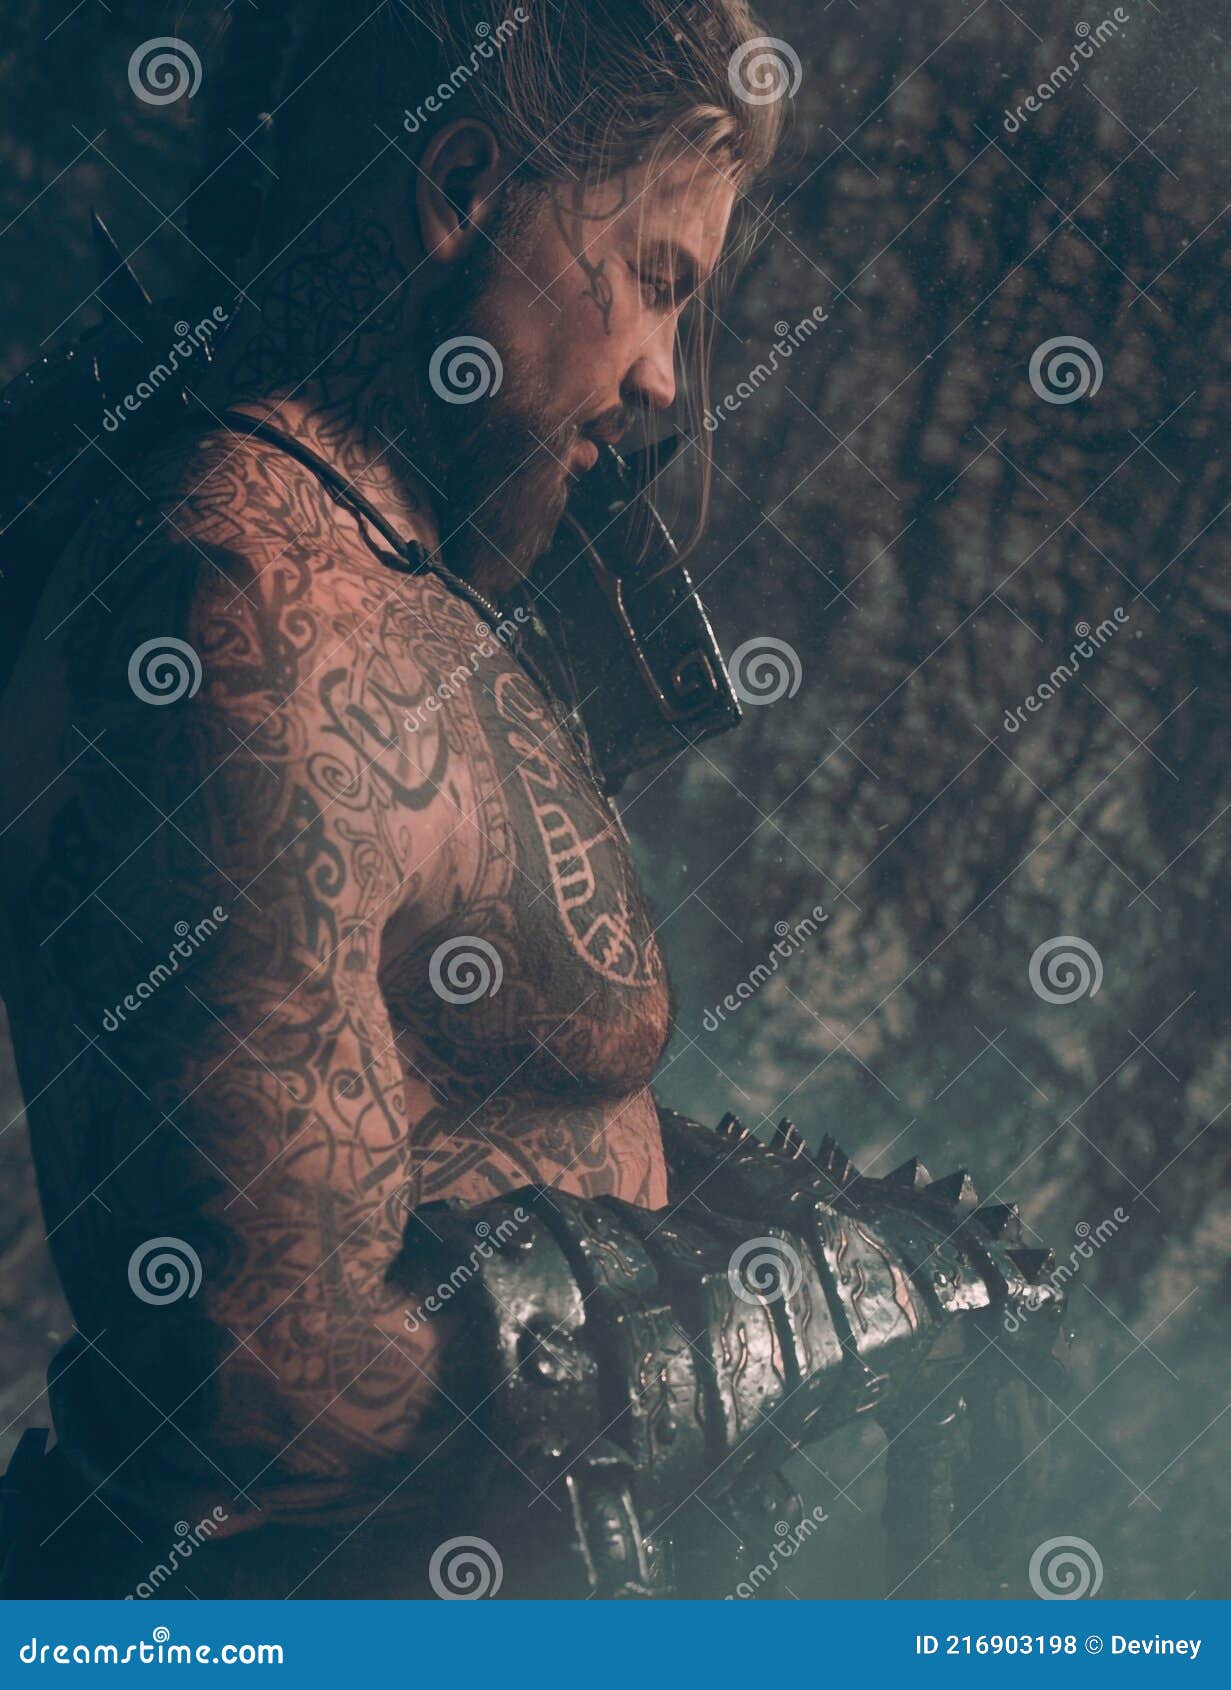 Warrior with tattoos stock illustration. Illustration of form - 216903198